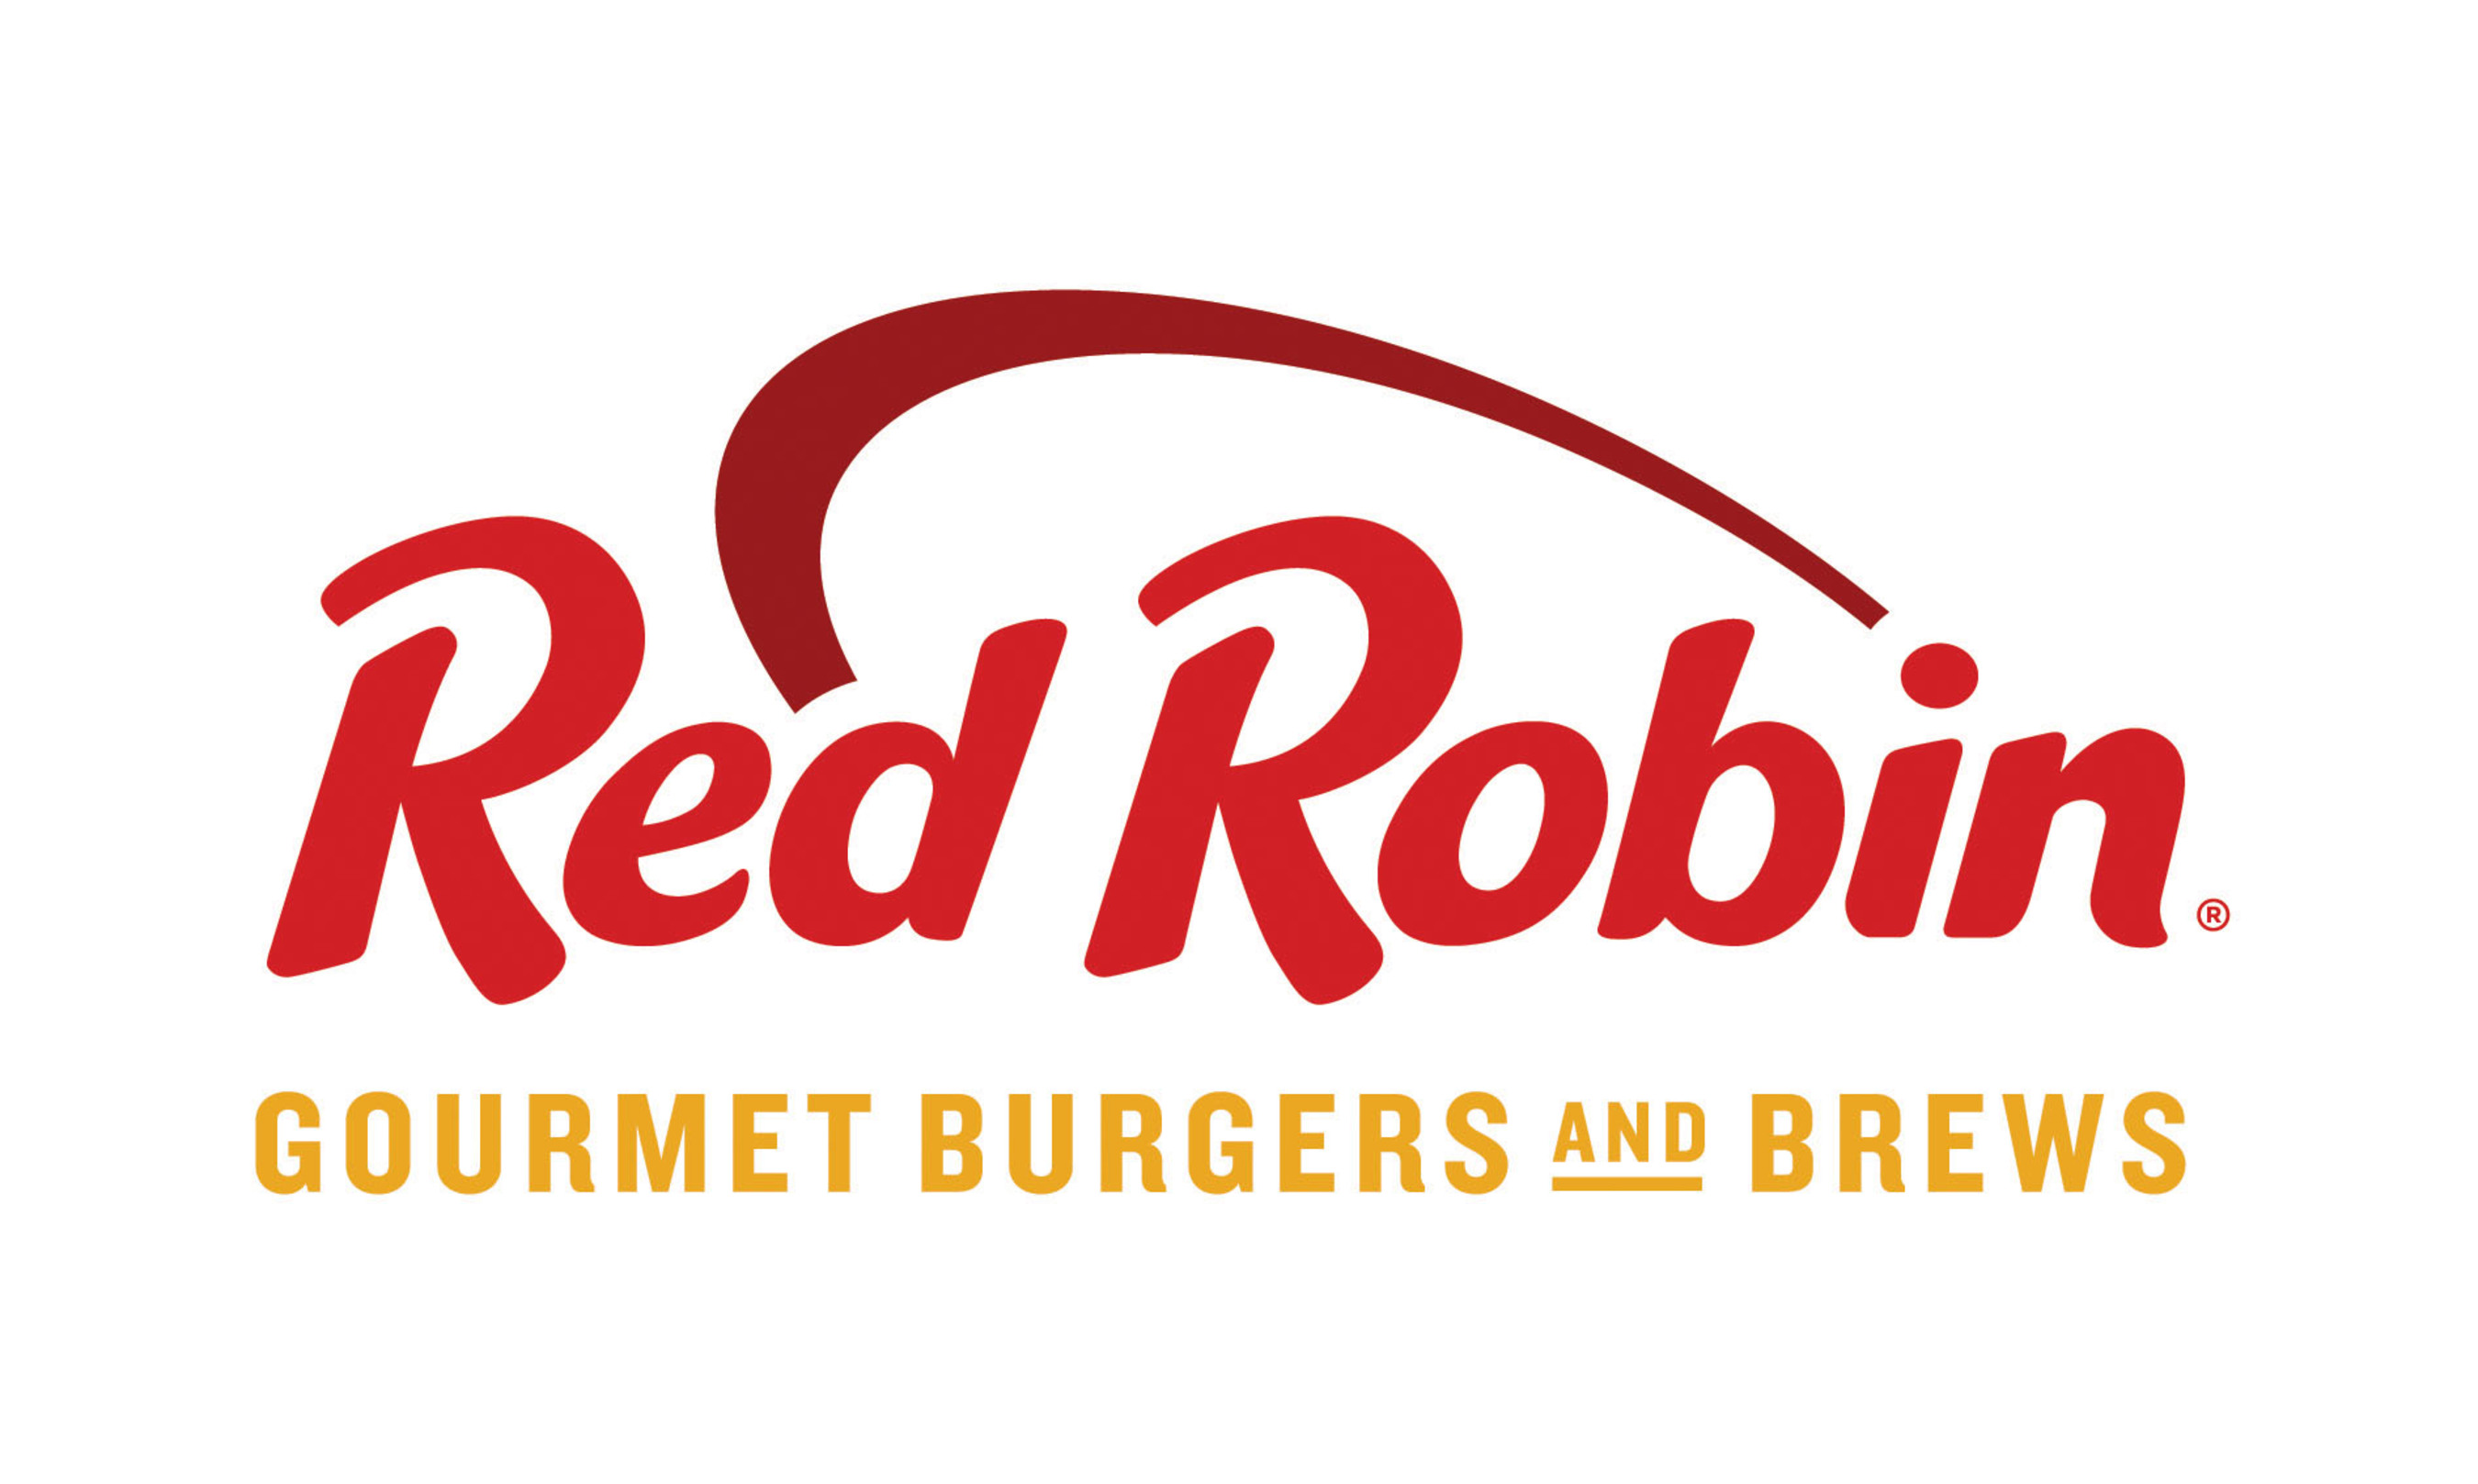 Red Robin Gourmet Burgers and Brews (PRNewsFoto/Red Robin Gourmet Burgers, Inc.) (PRNewsFoto/)